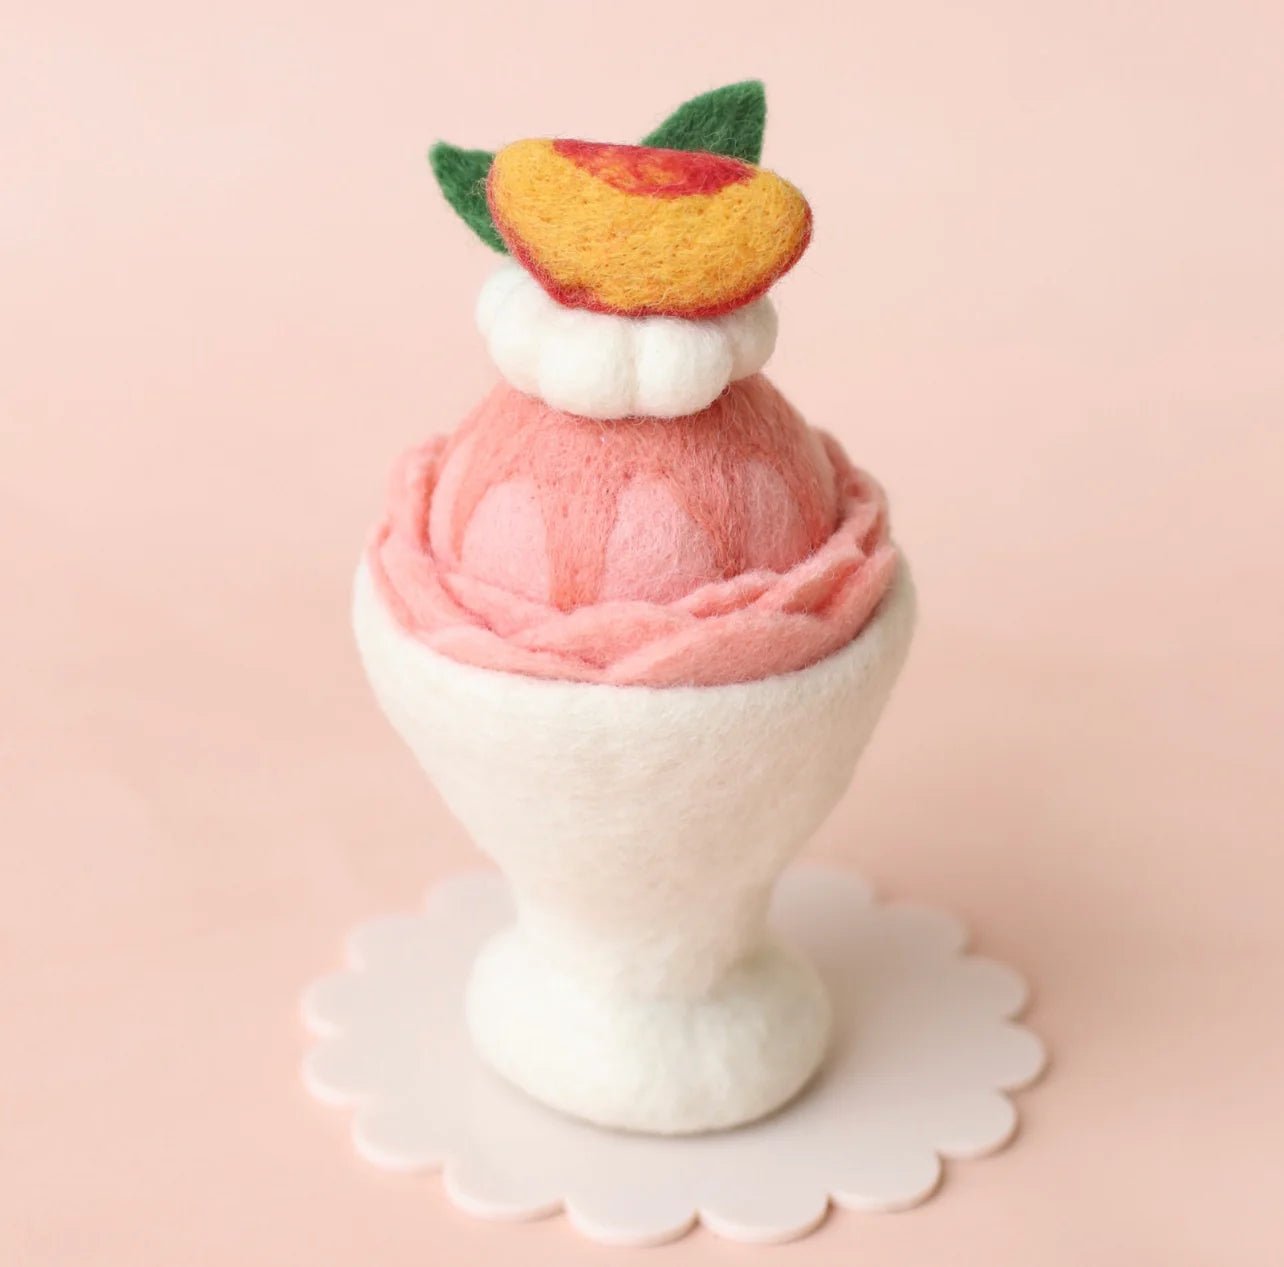 JUNI MOON | ICE-CREAM SUNDAE Peach Sorbet *NEW* by JUNI MOON - The Playful Collective